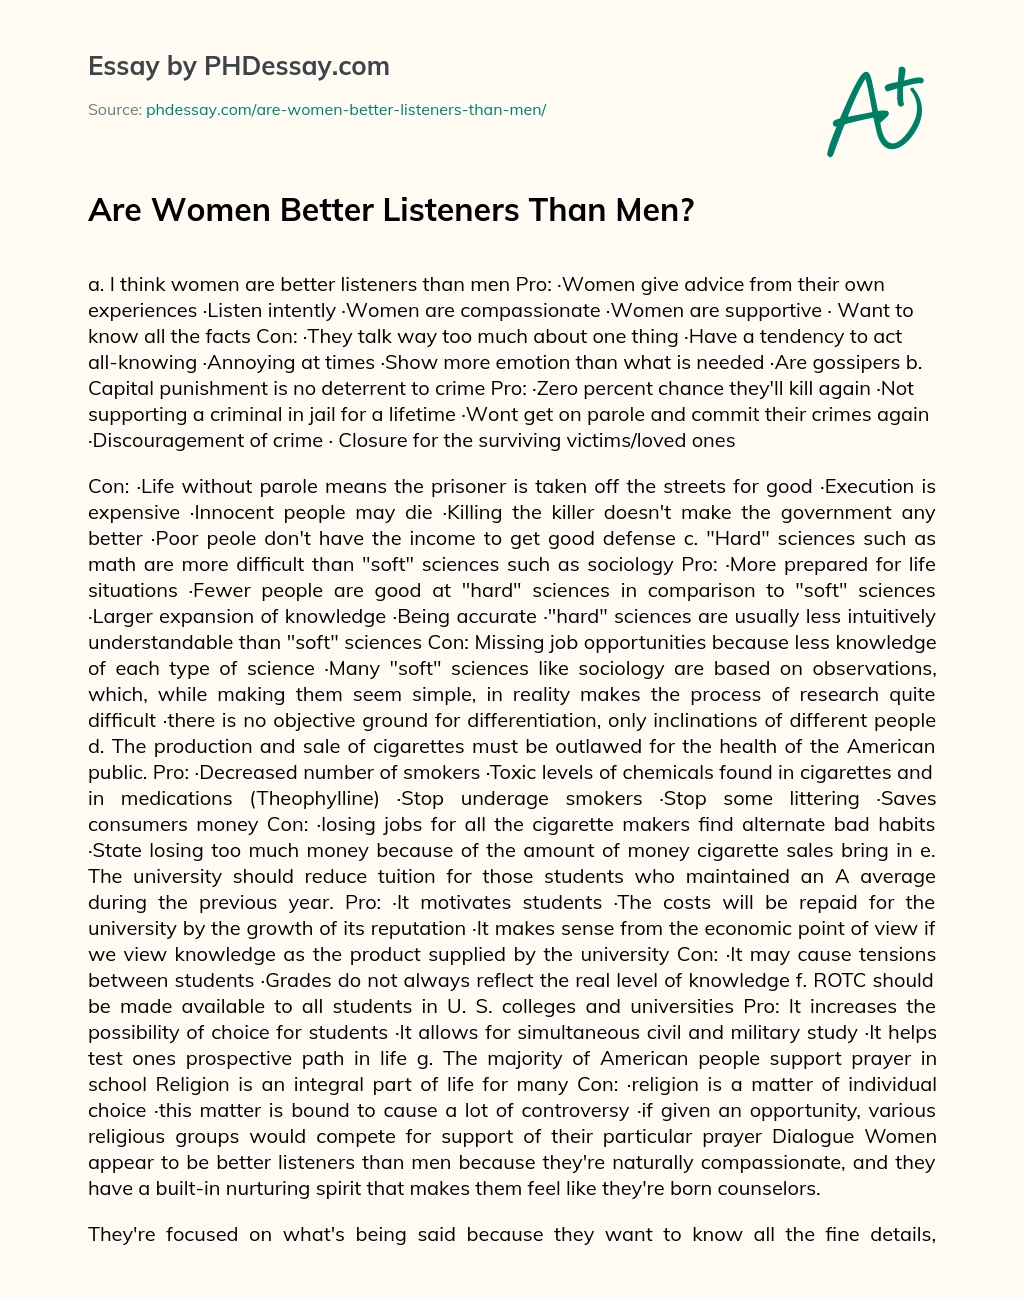 Are Women Better Listeners Than Men? essay